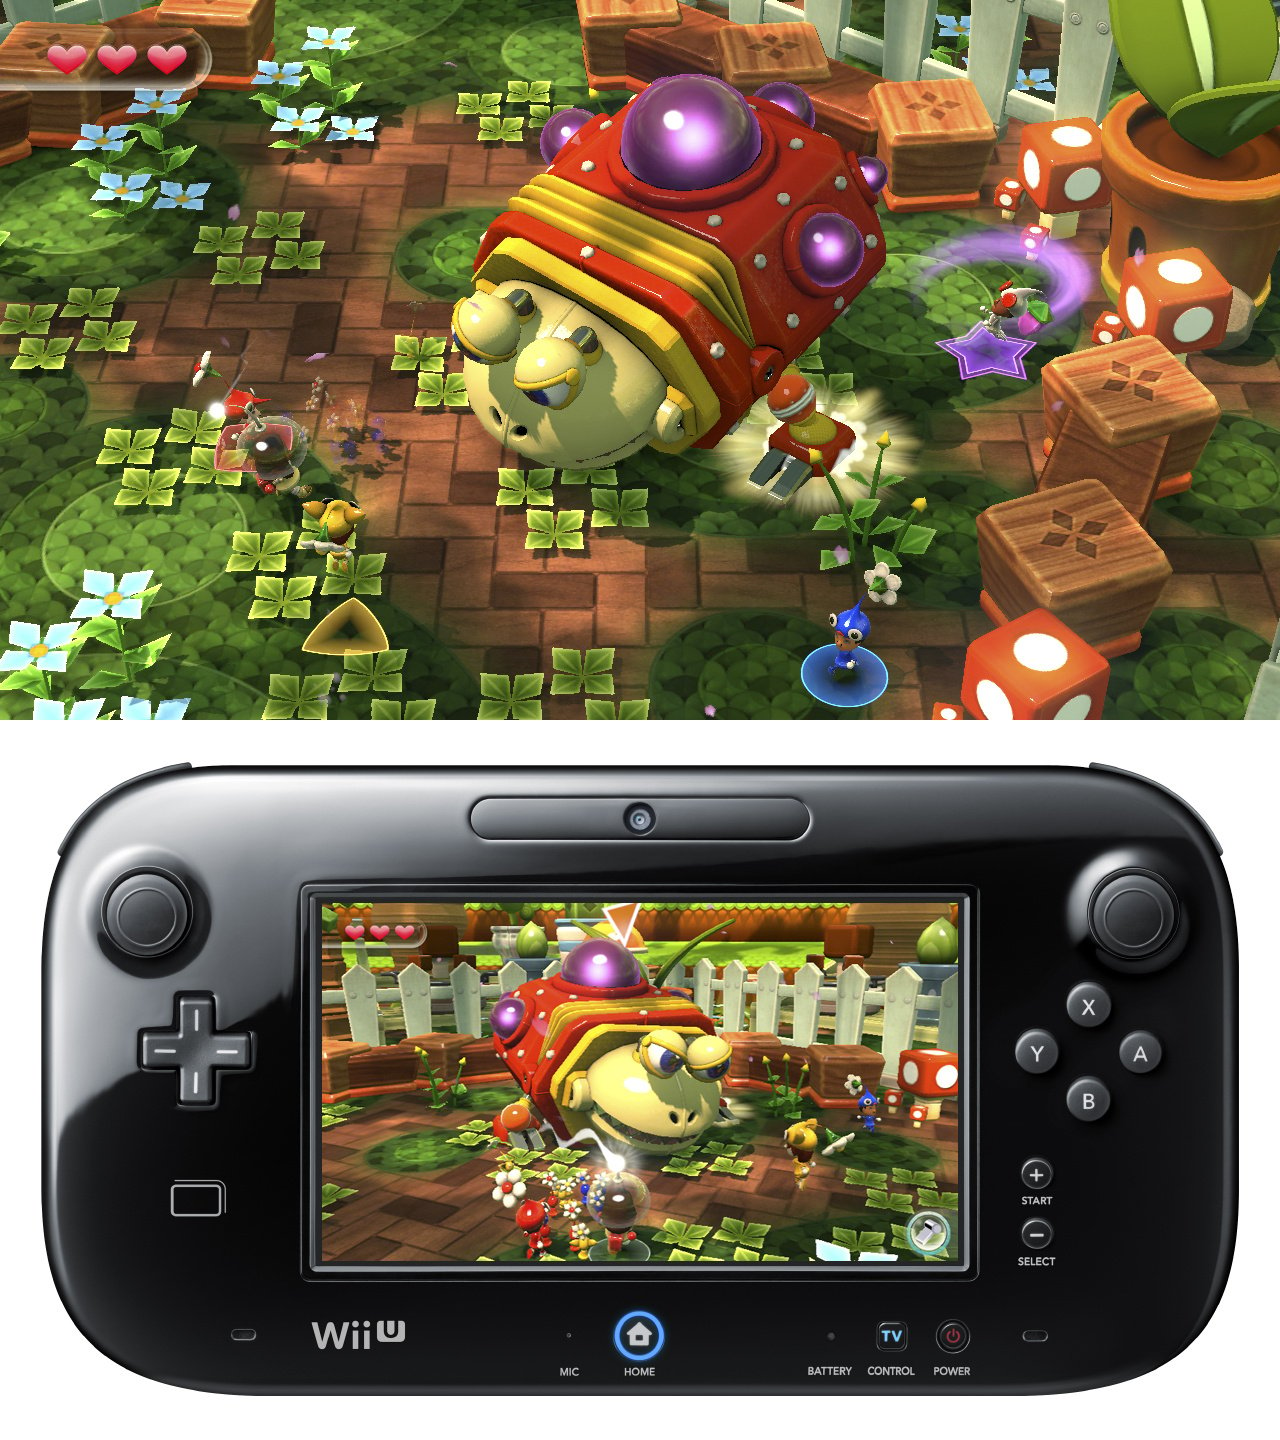 Nintendo Land Wii U Game Profile News Reviews Videos Screenshots